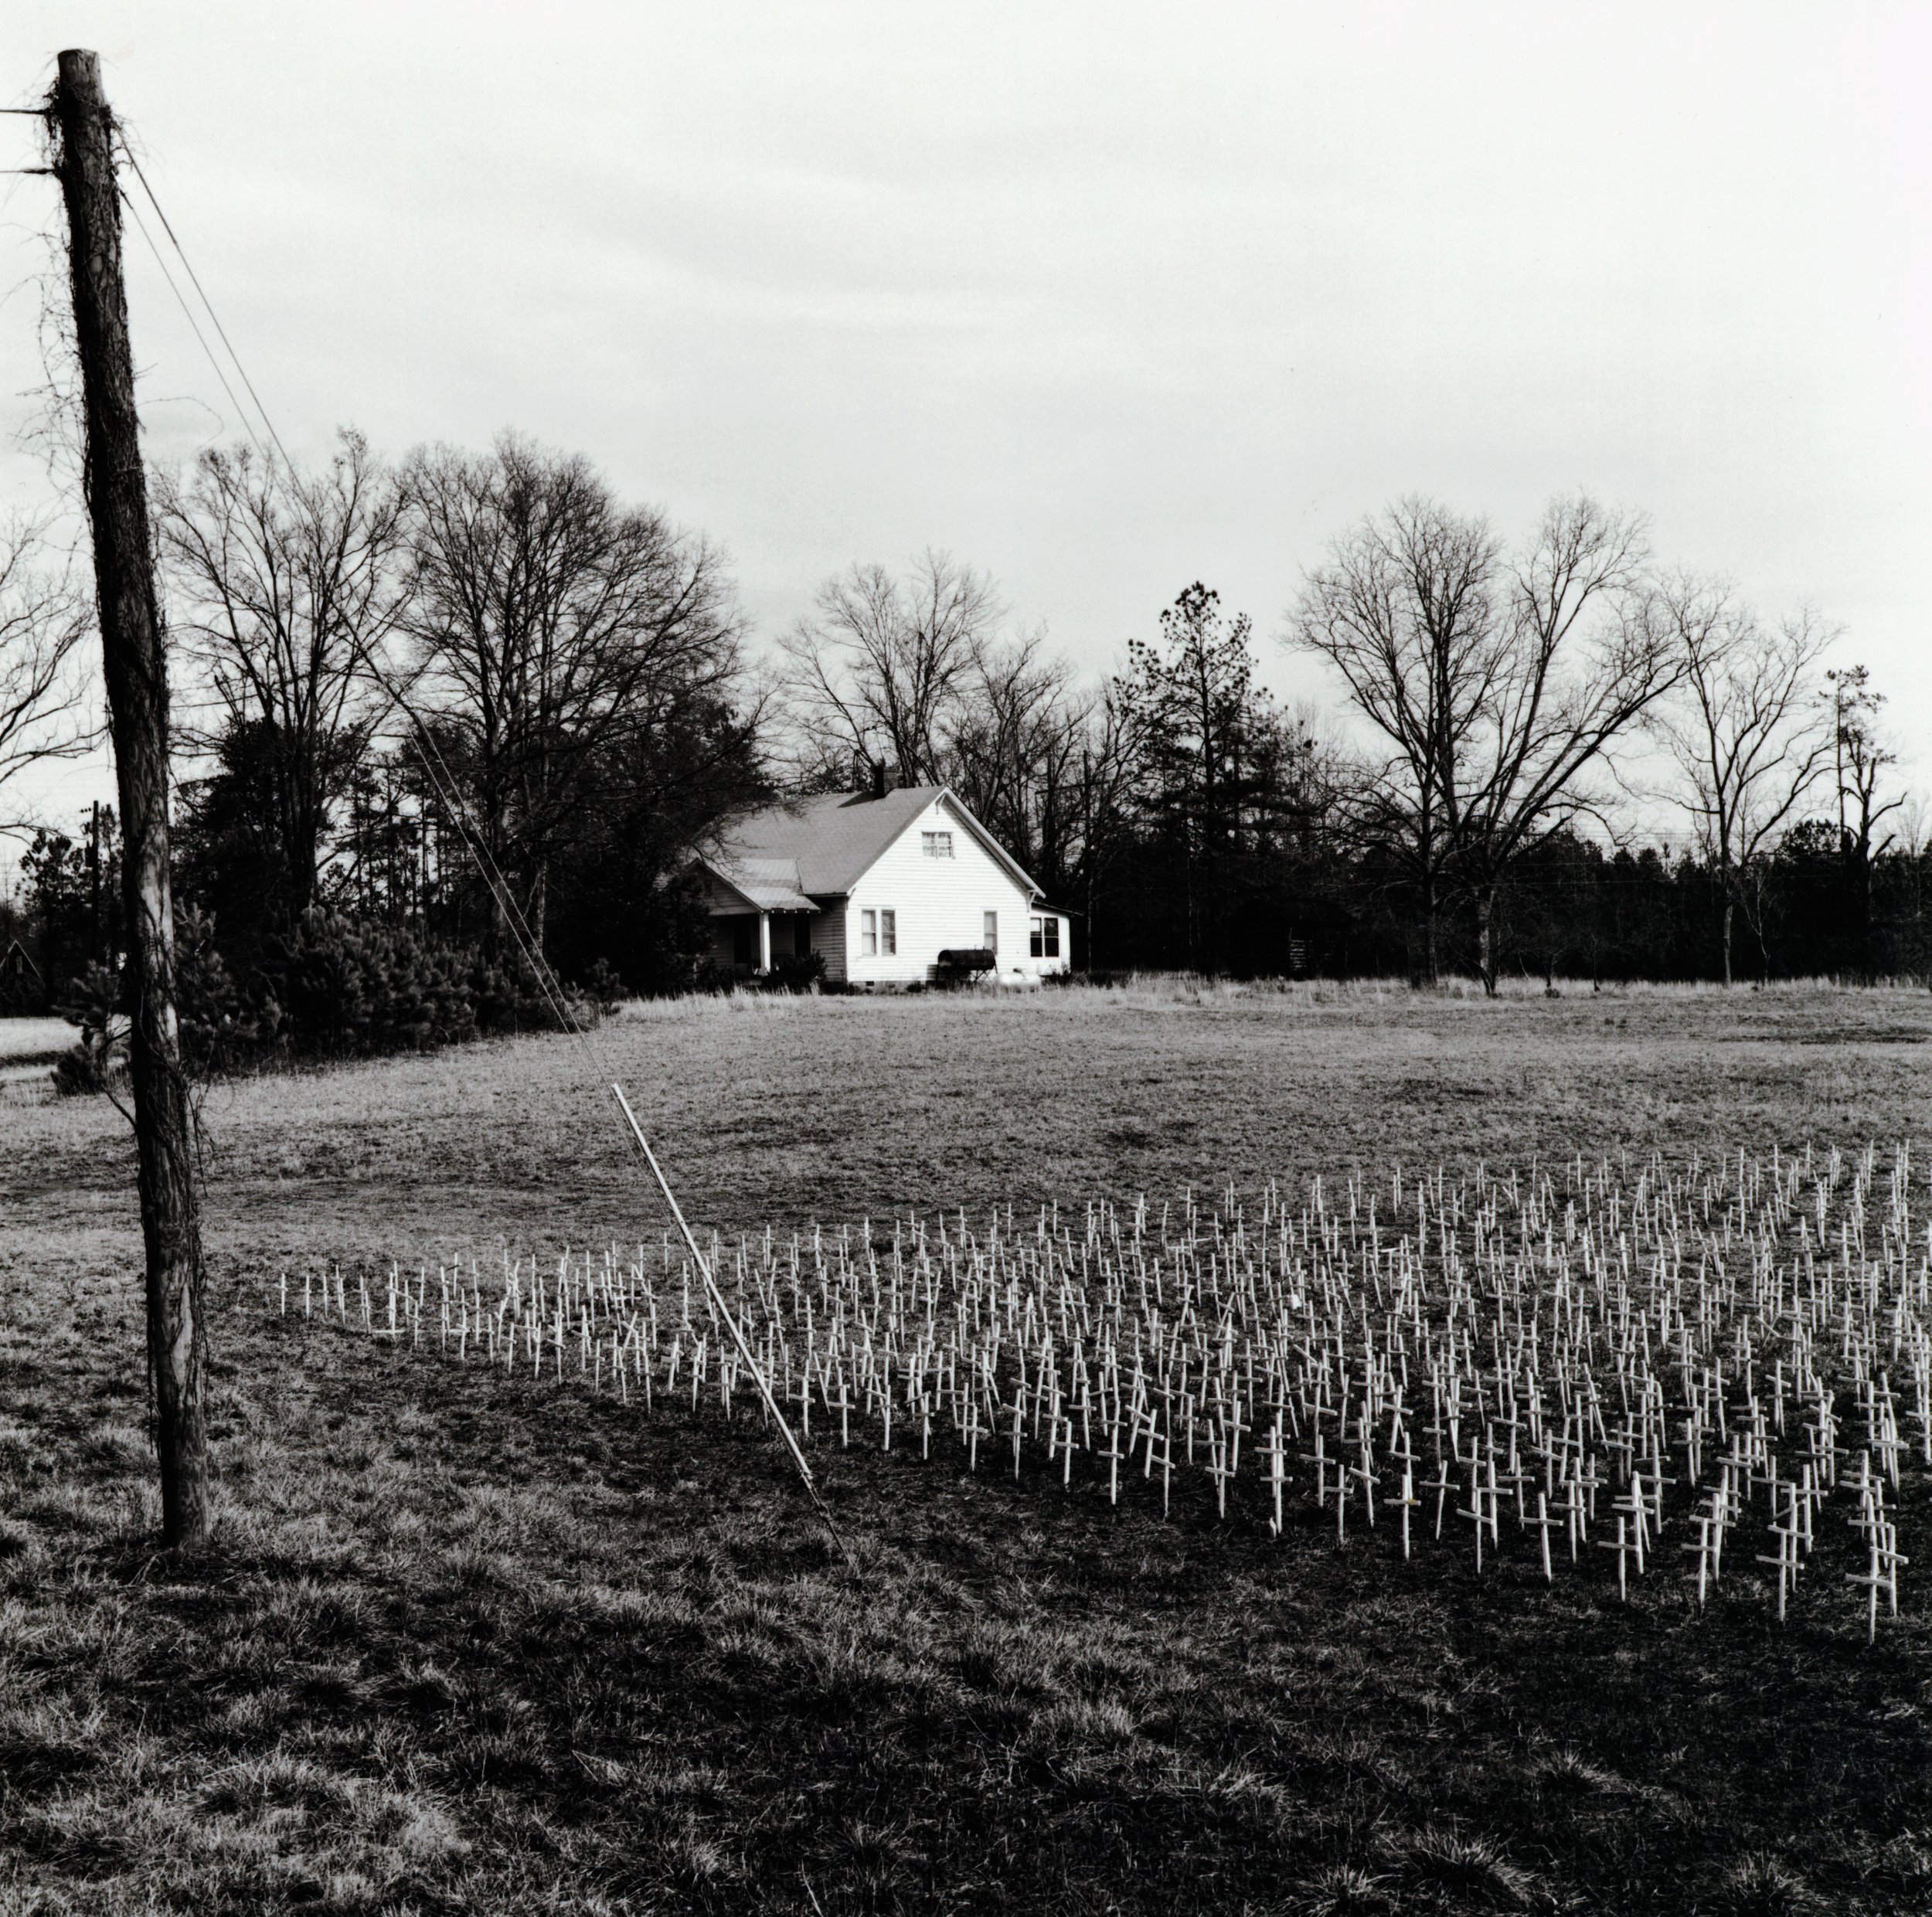 Field of Crosses, Georgia, 2001